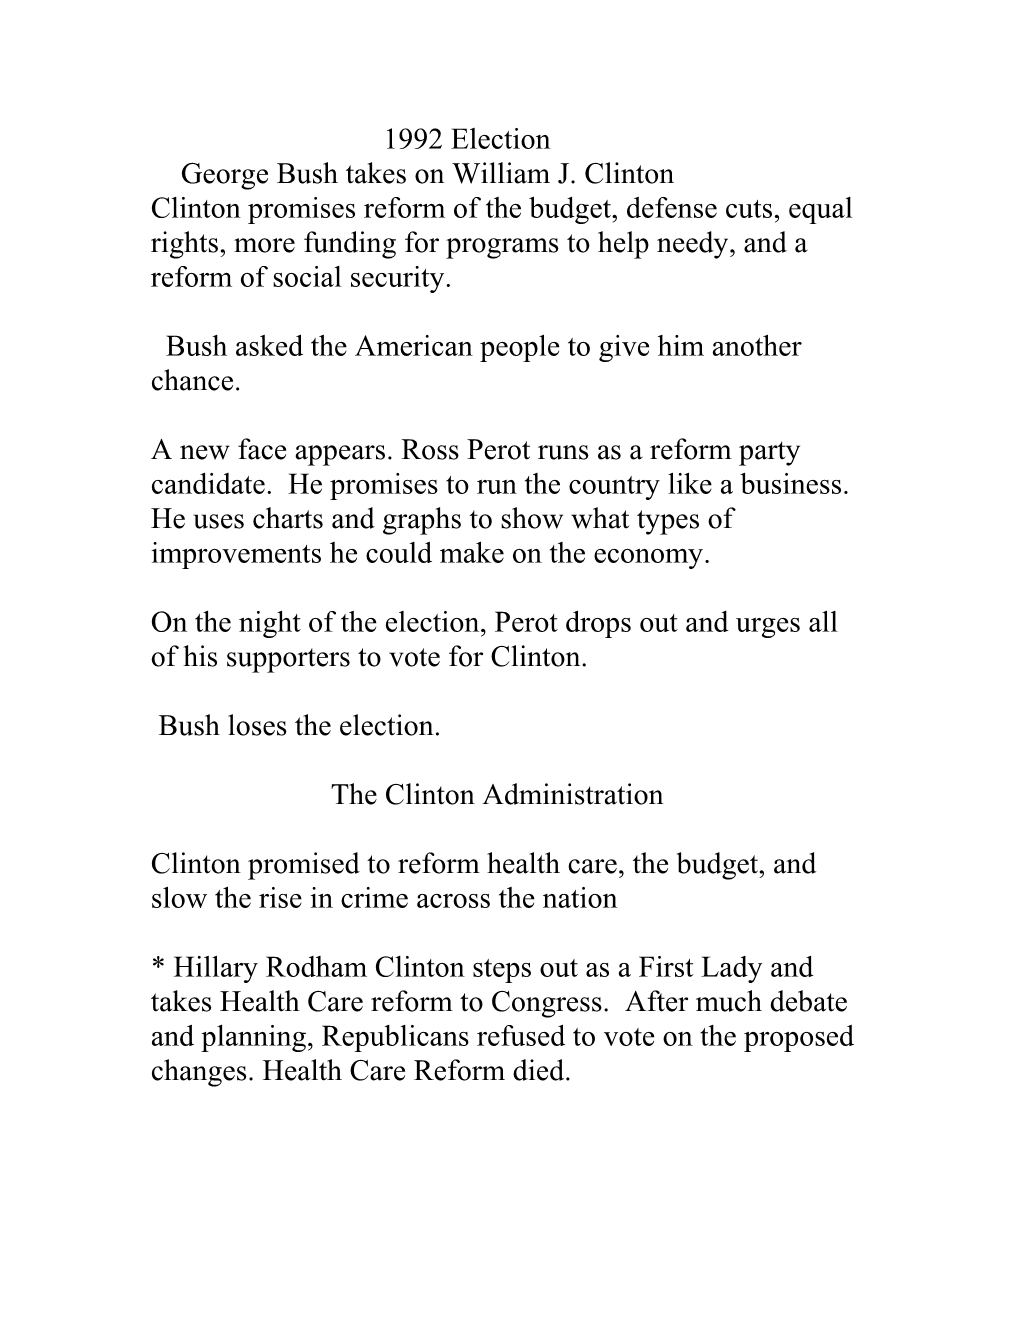 George Bush Takes on William J. Clinton